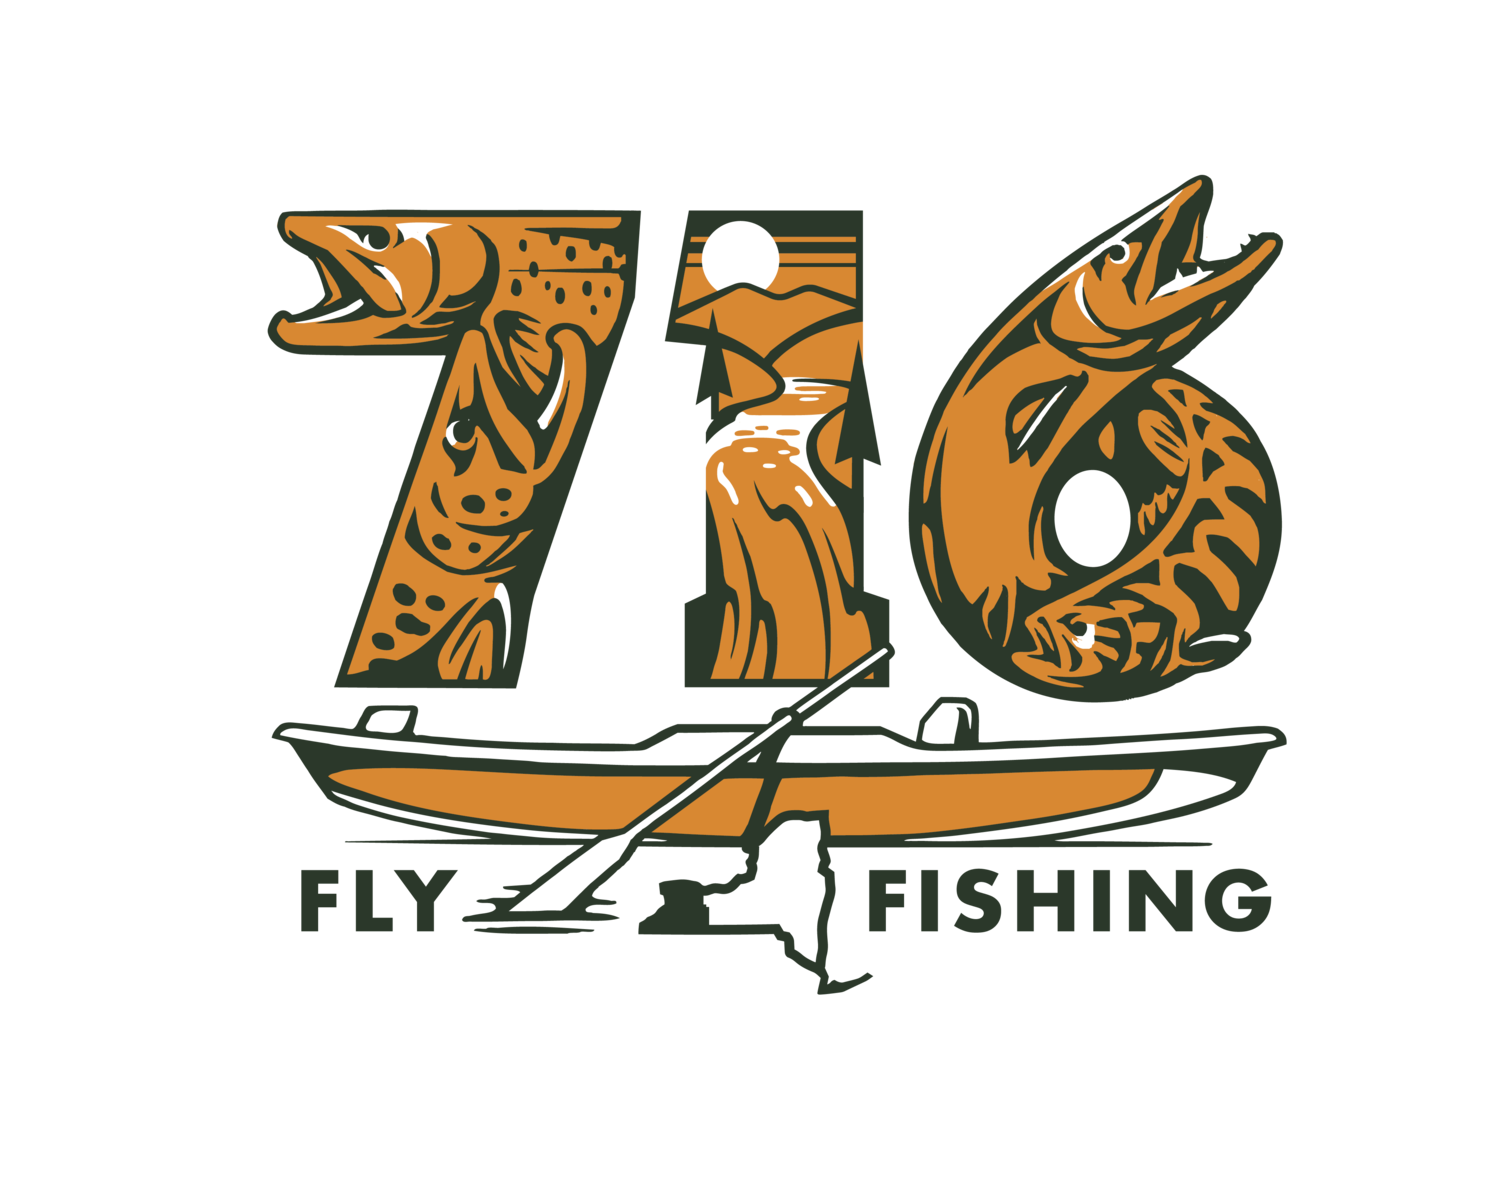 Nick Sagnibene of 716 Fly Fishing